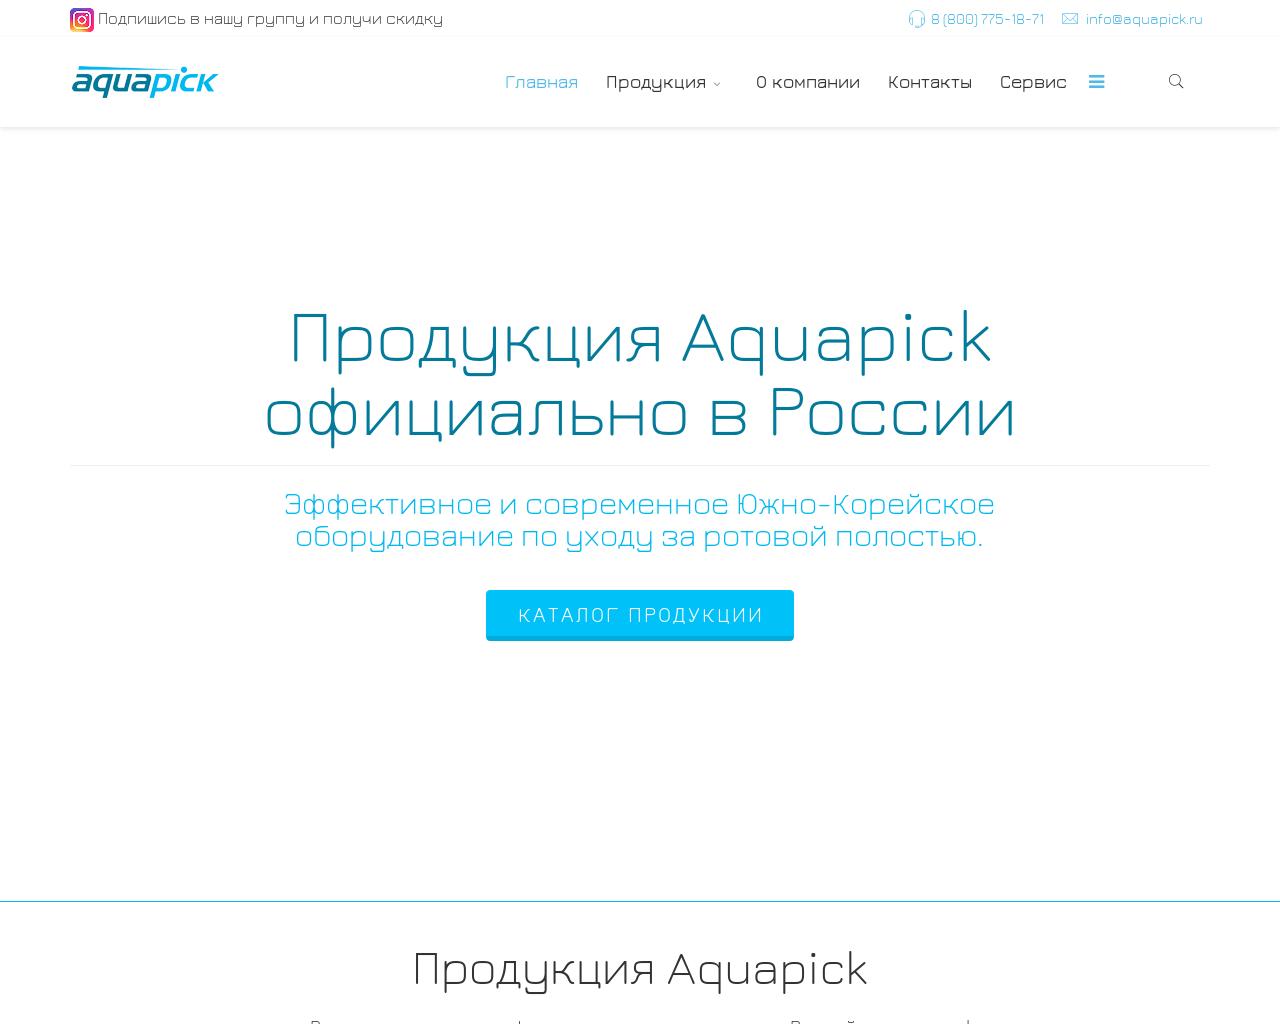 Изображение сайта aquapick.ru в разрешении 1280x1024